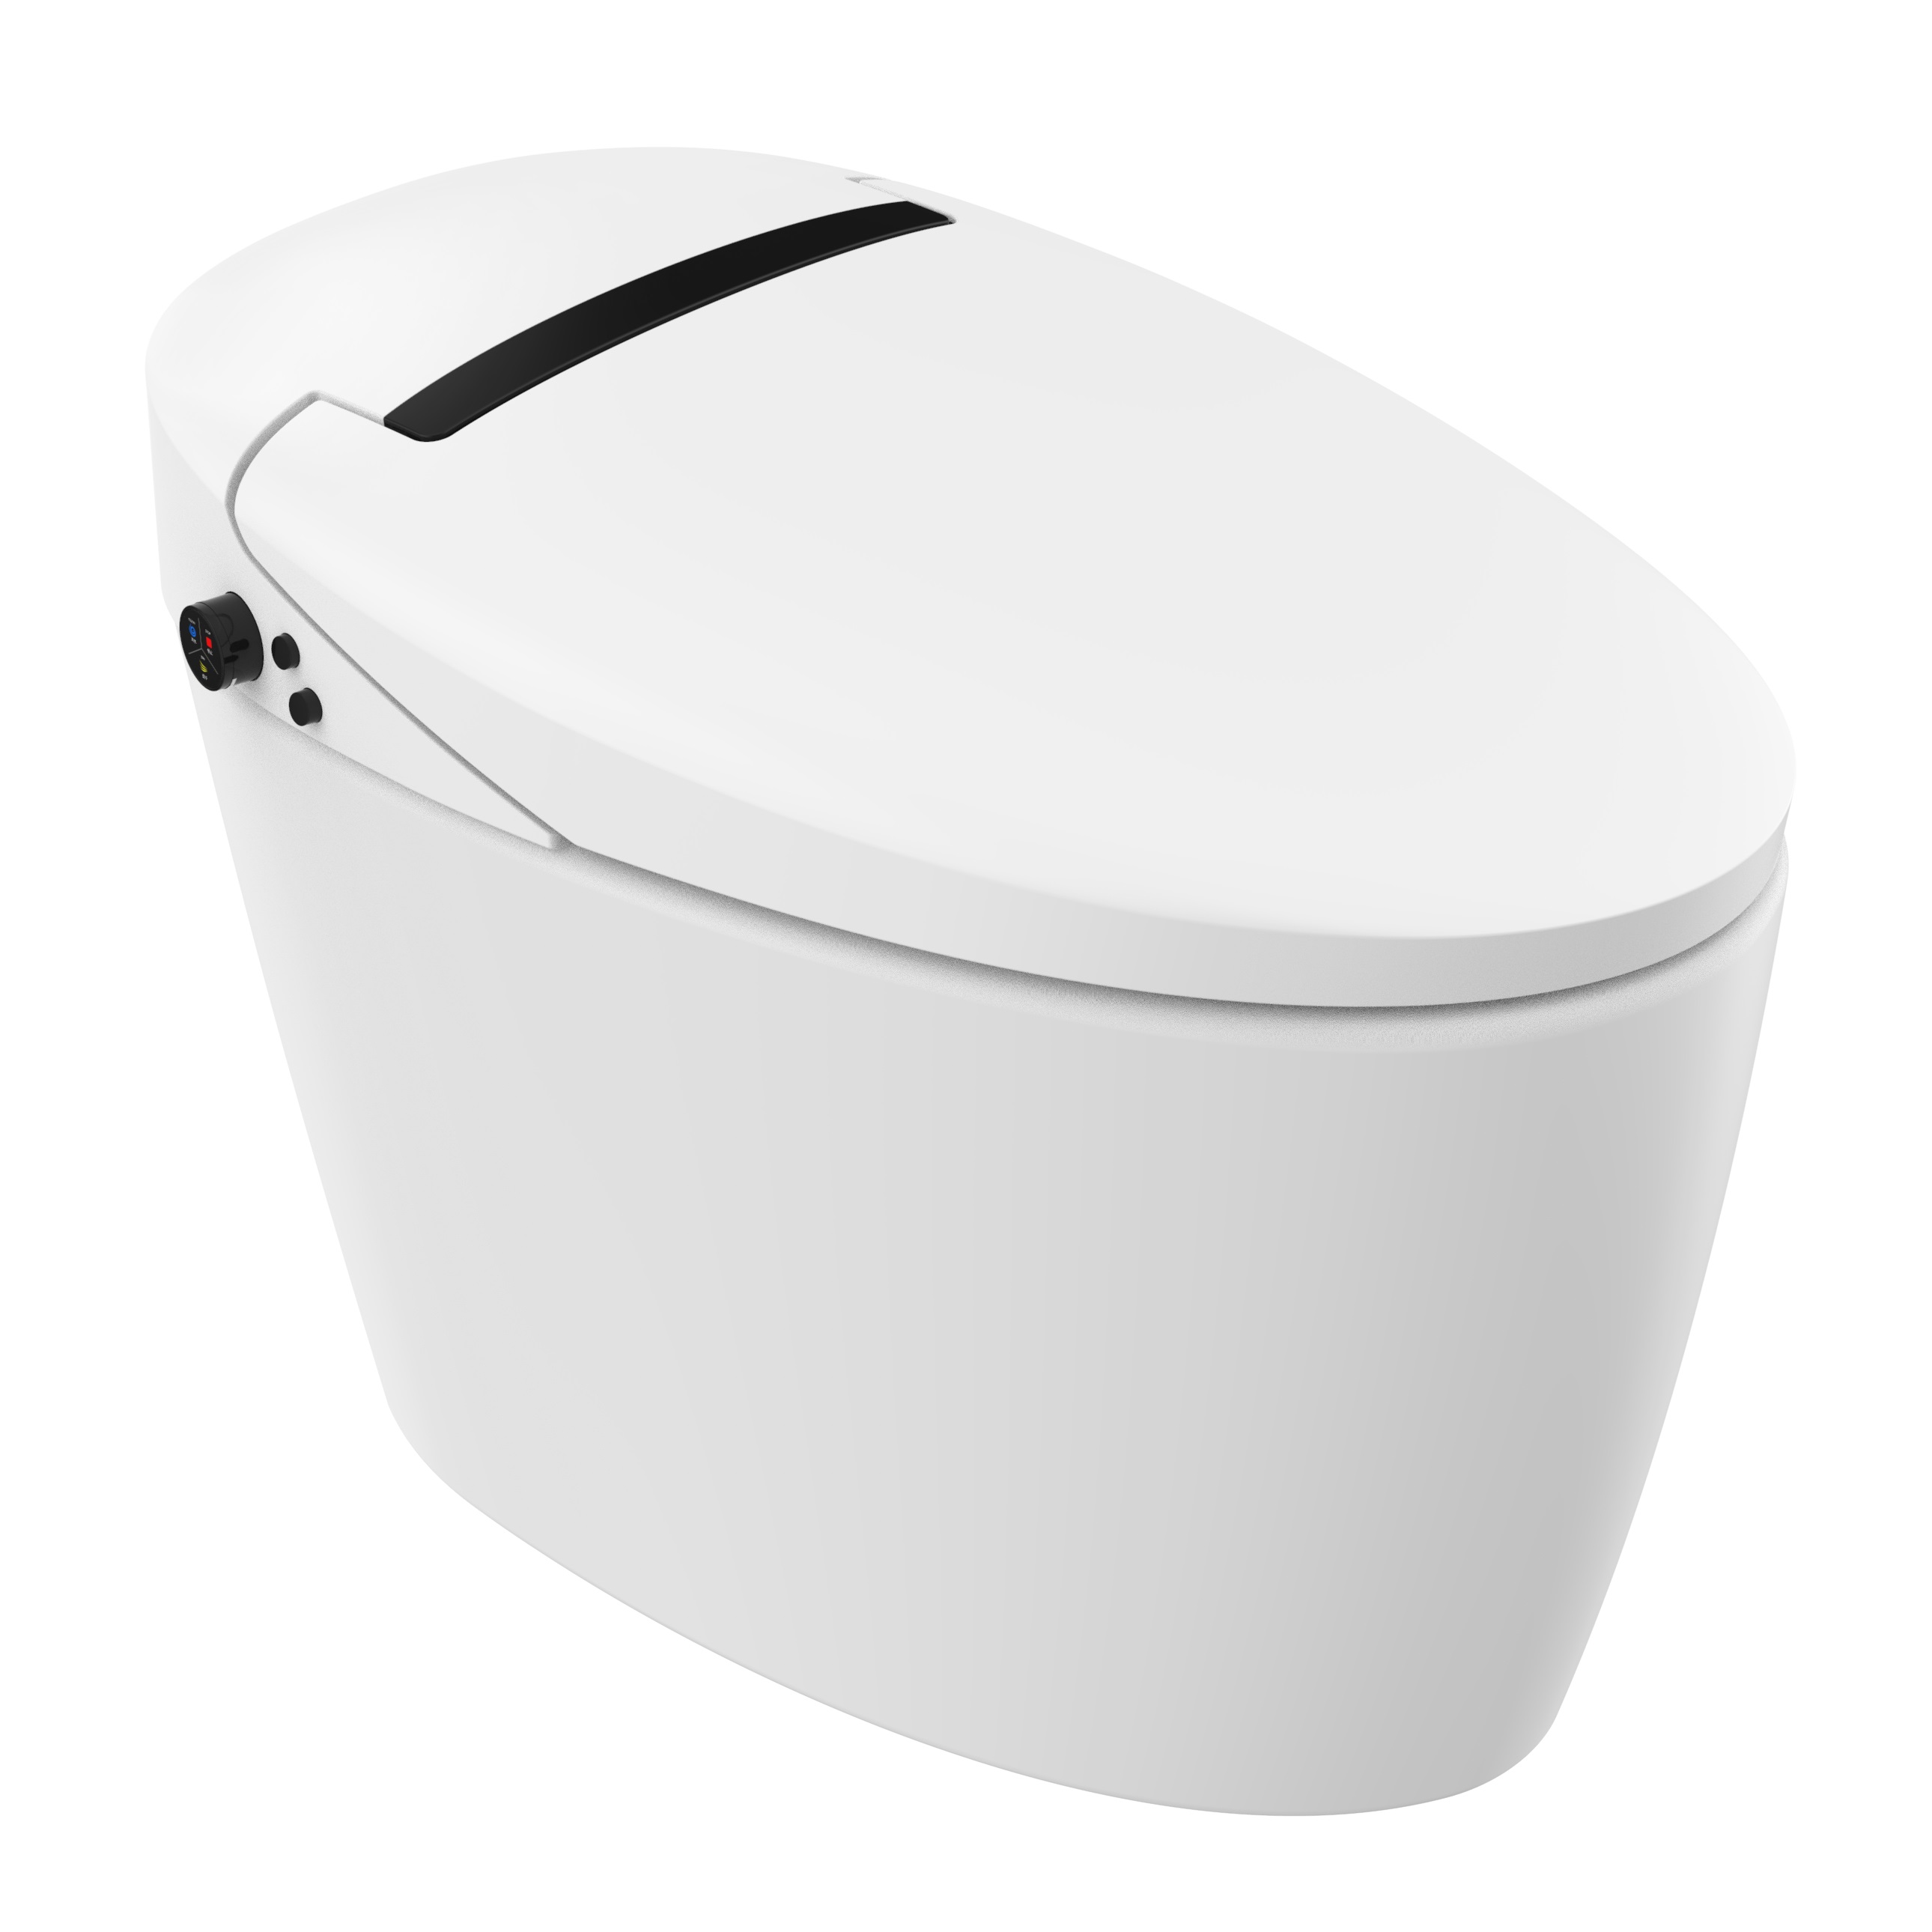 Advanced Automatic Intelligent Toilets Best American Standard’s Bidet M17